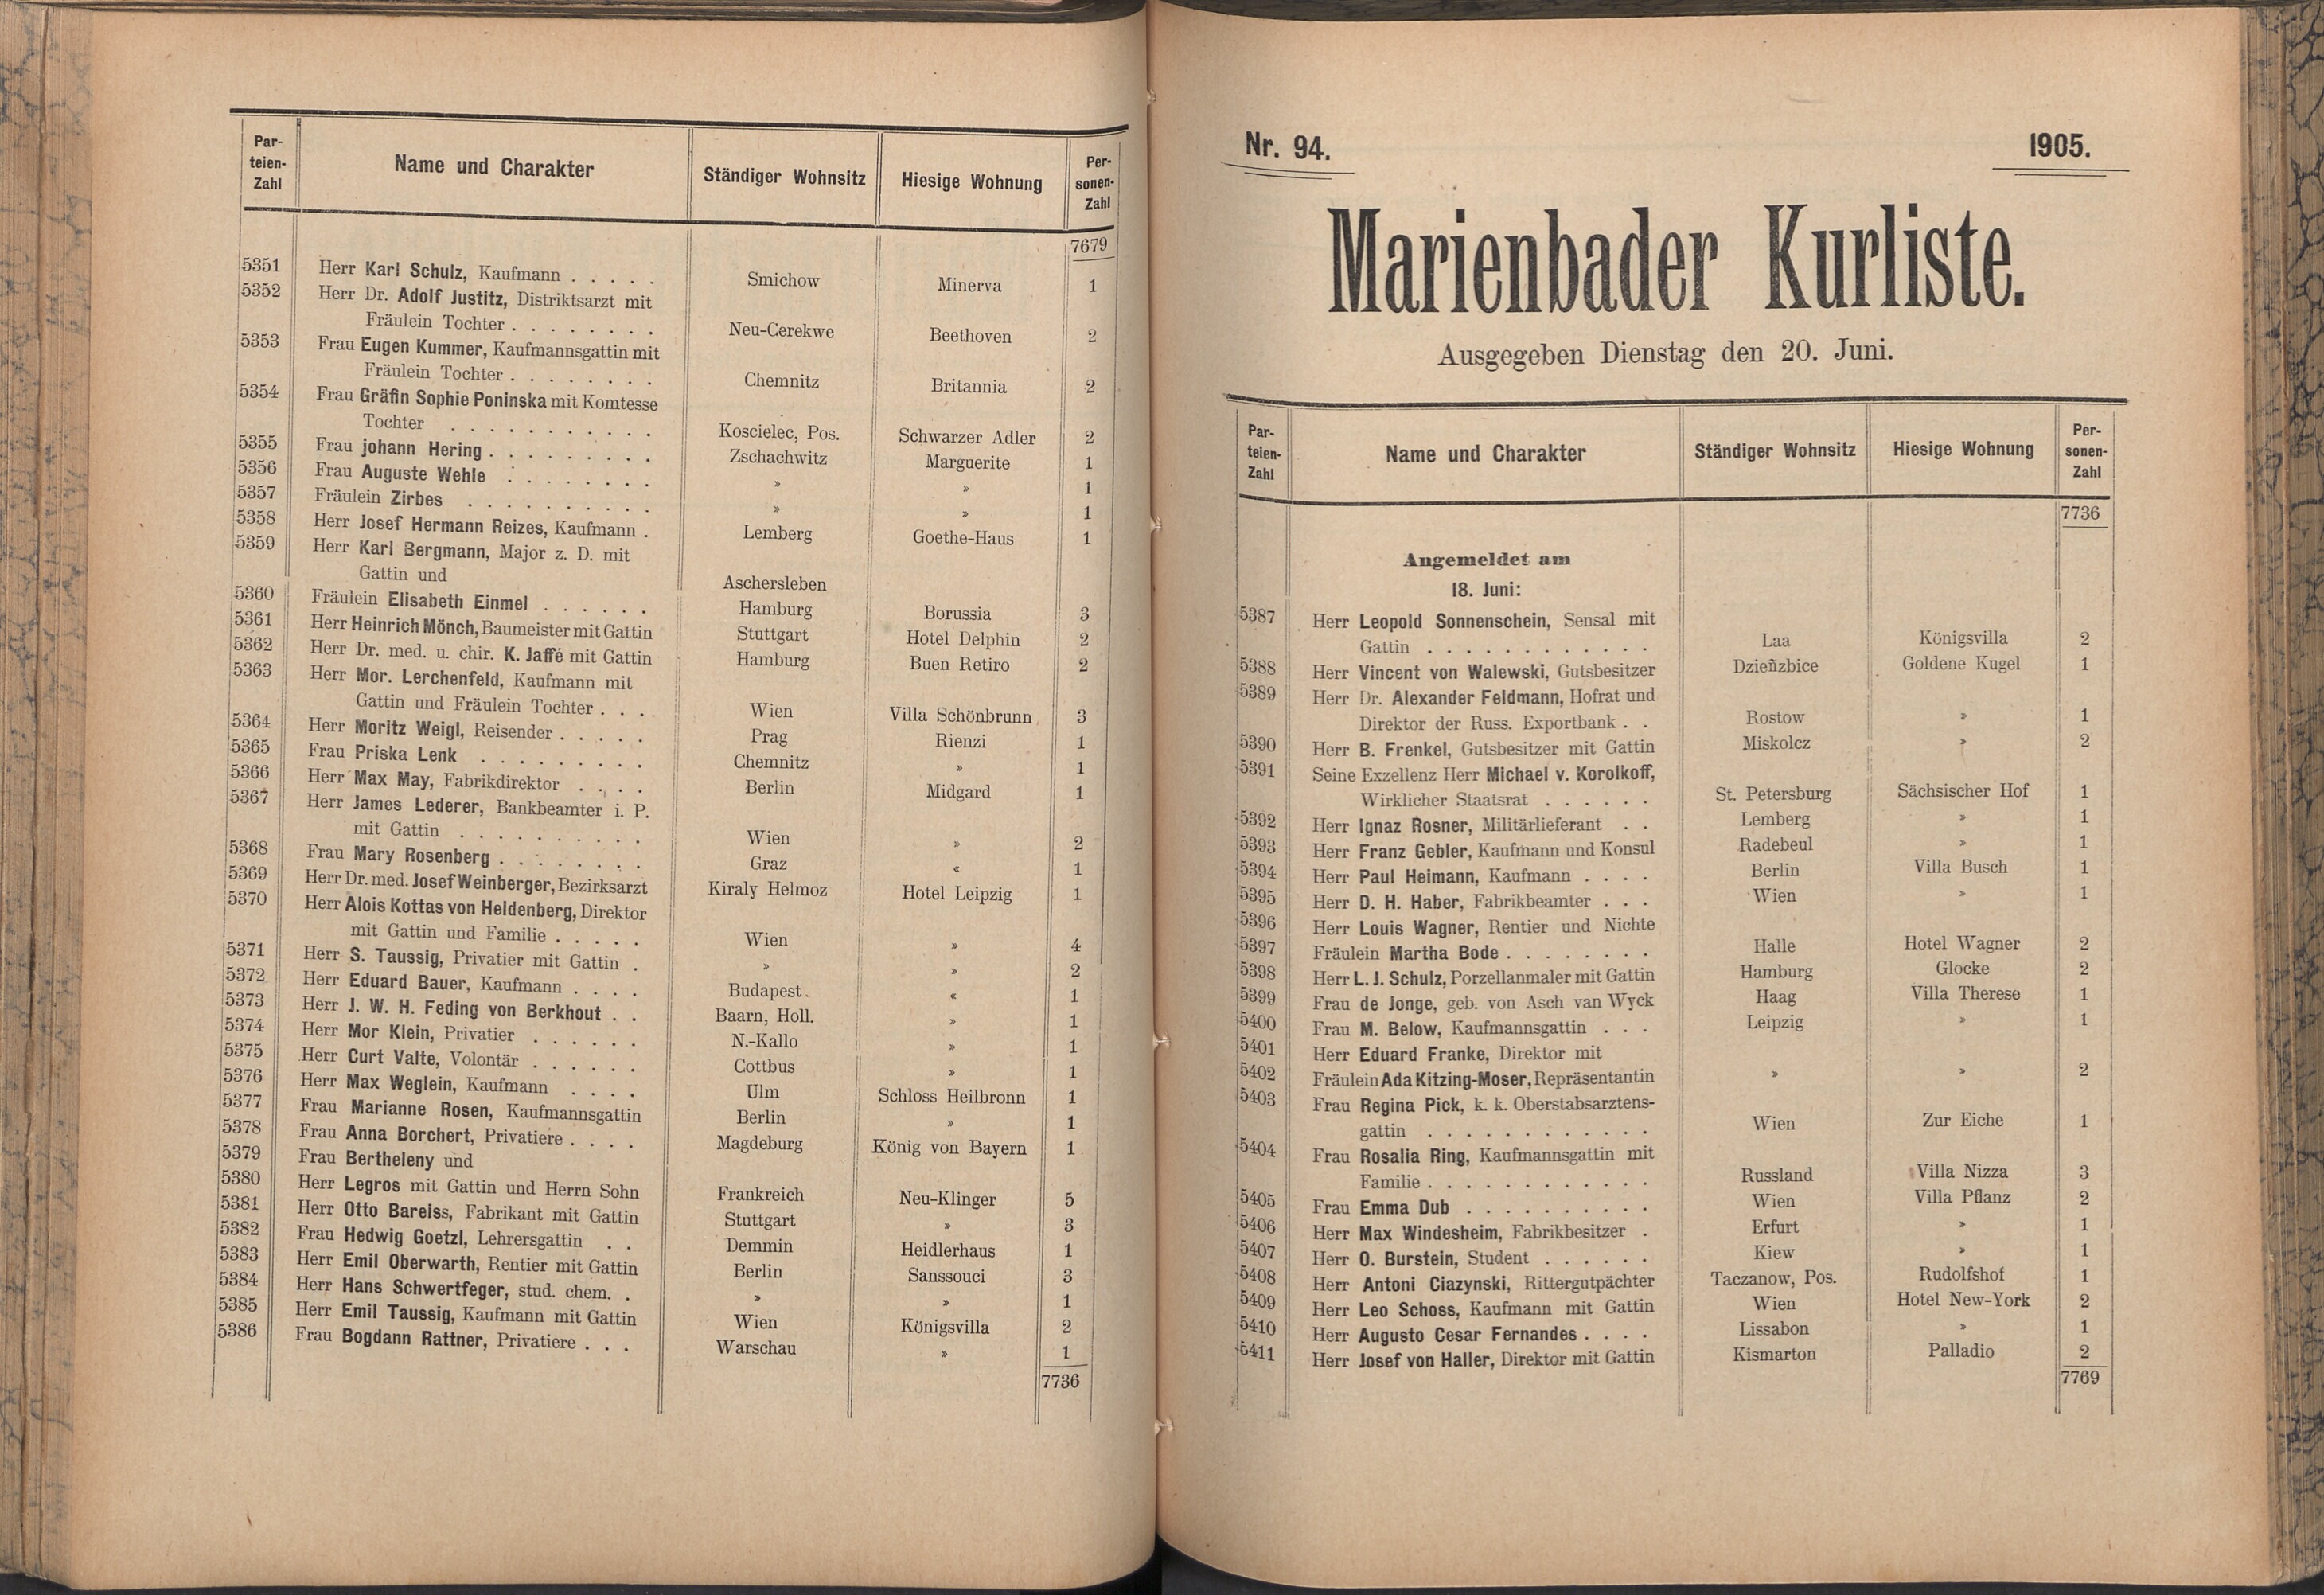 168. soap-ch_knihovna_marienbader-kurliste-1905_1680